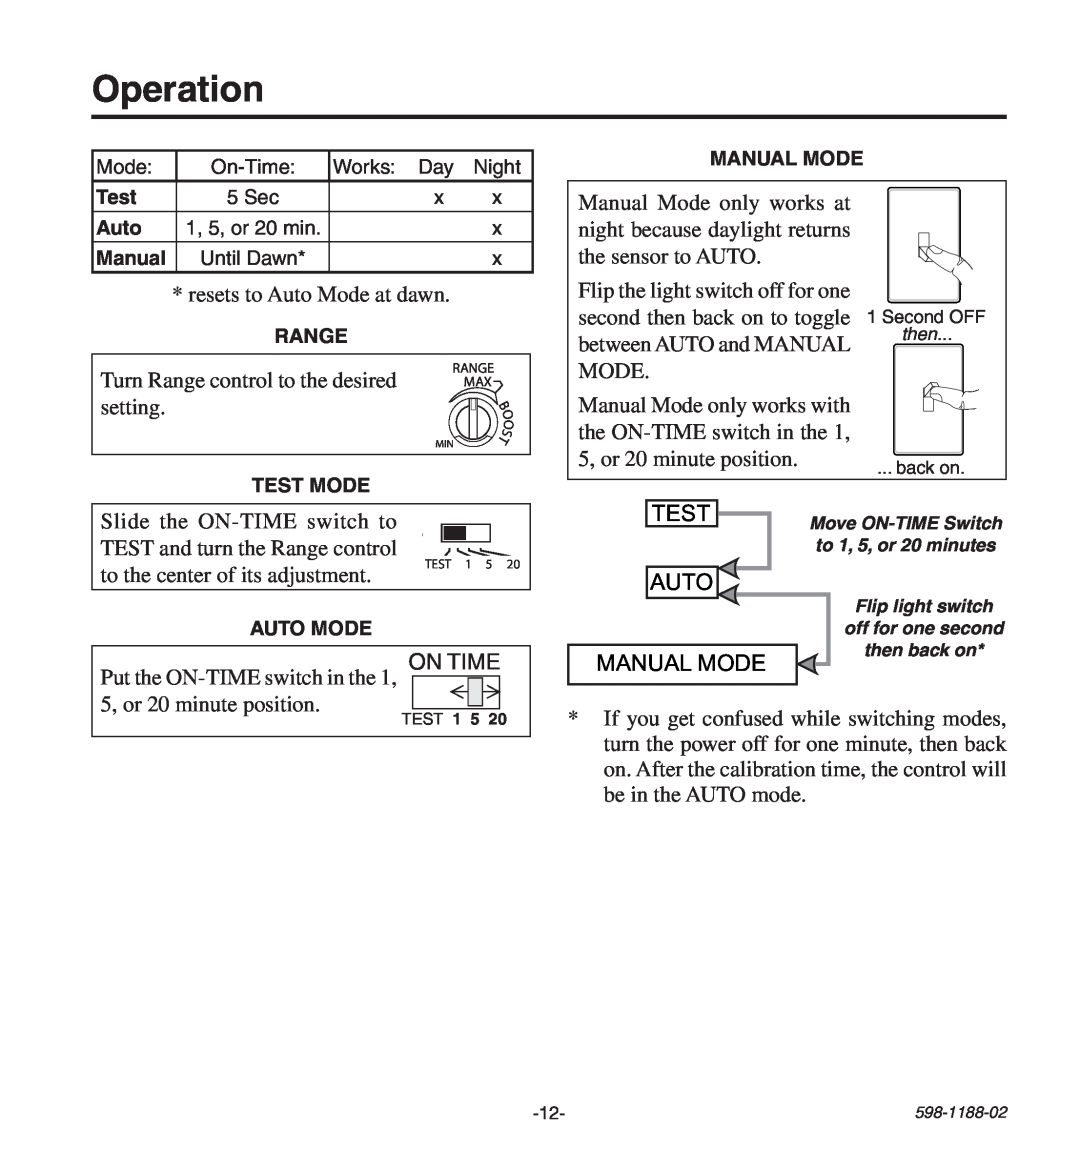 Heath Zenith HD-9260 manual Operation, Test, Auto, Manual Mode 